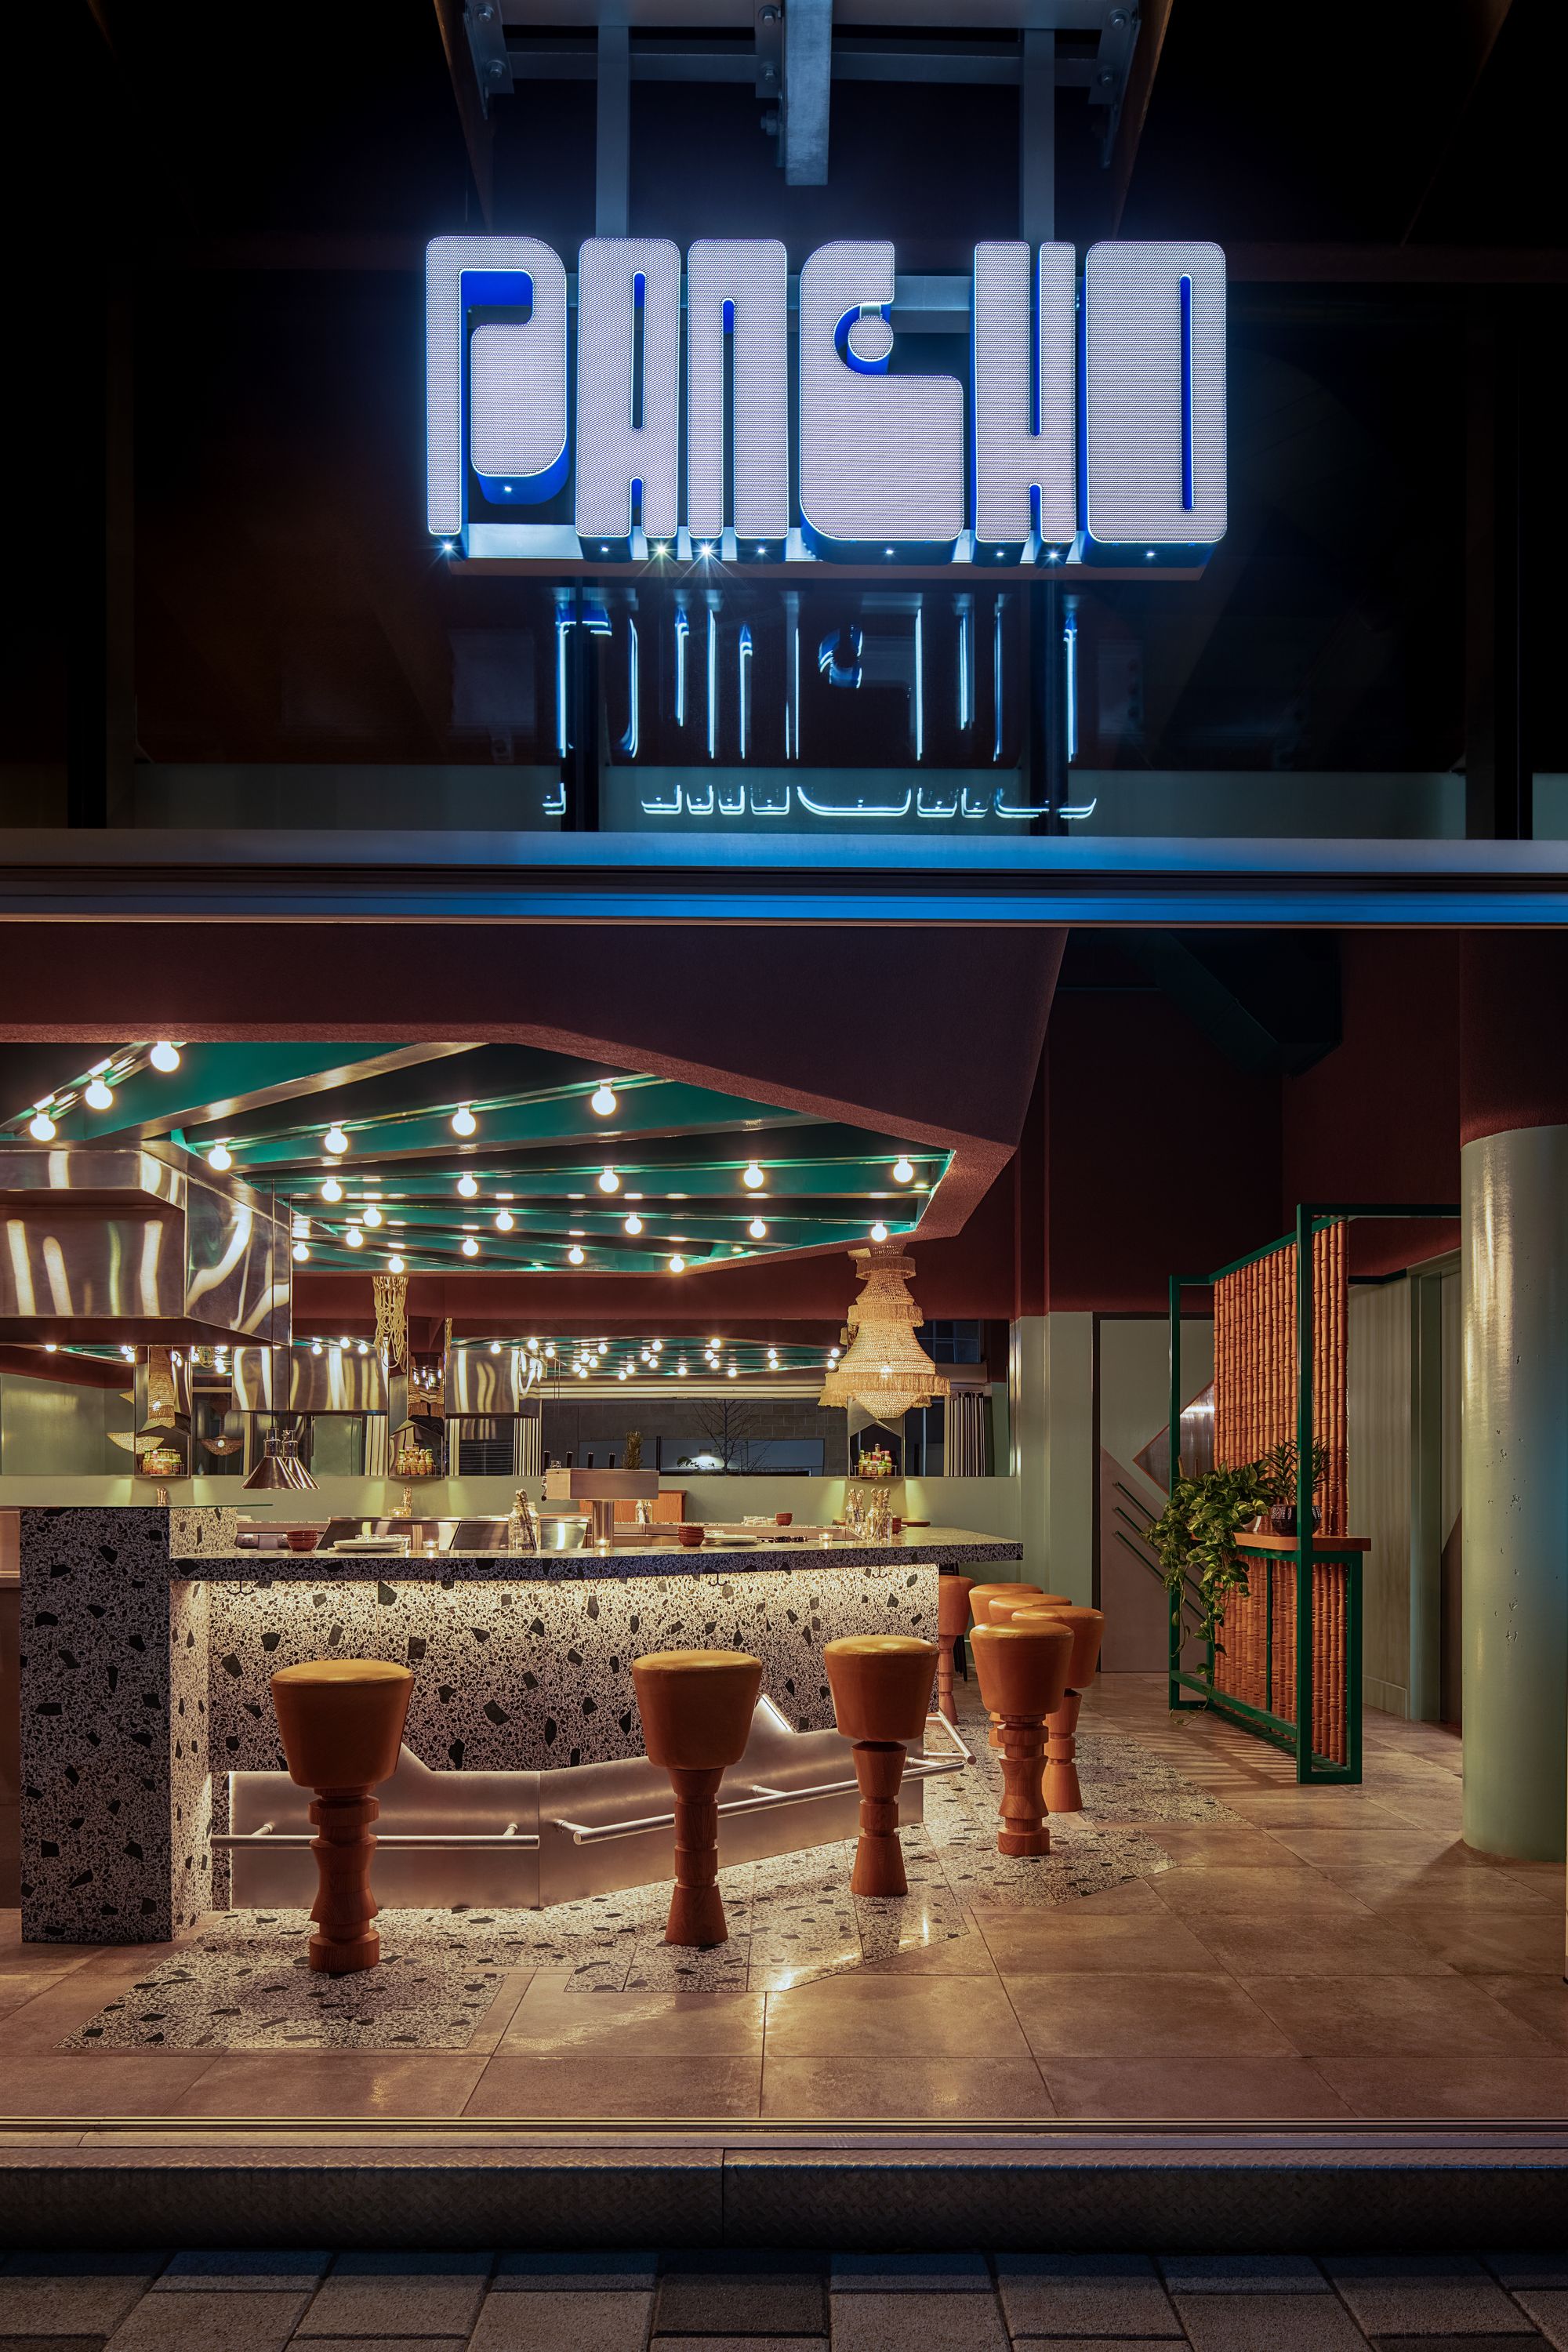 Pancho餐厅|ART-Arrakis | 建筑室内设计的创新与灵感